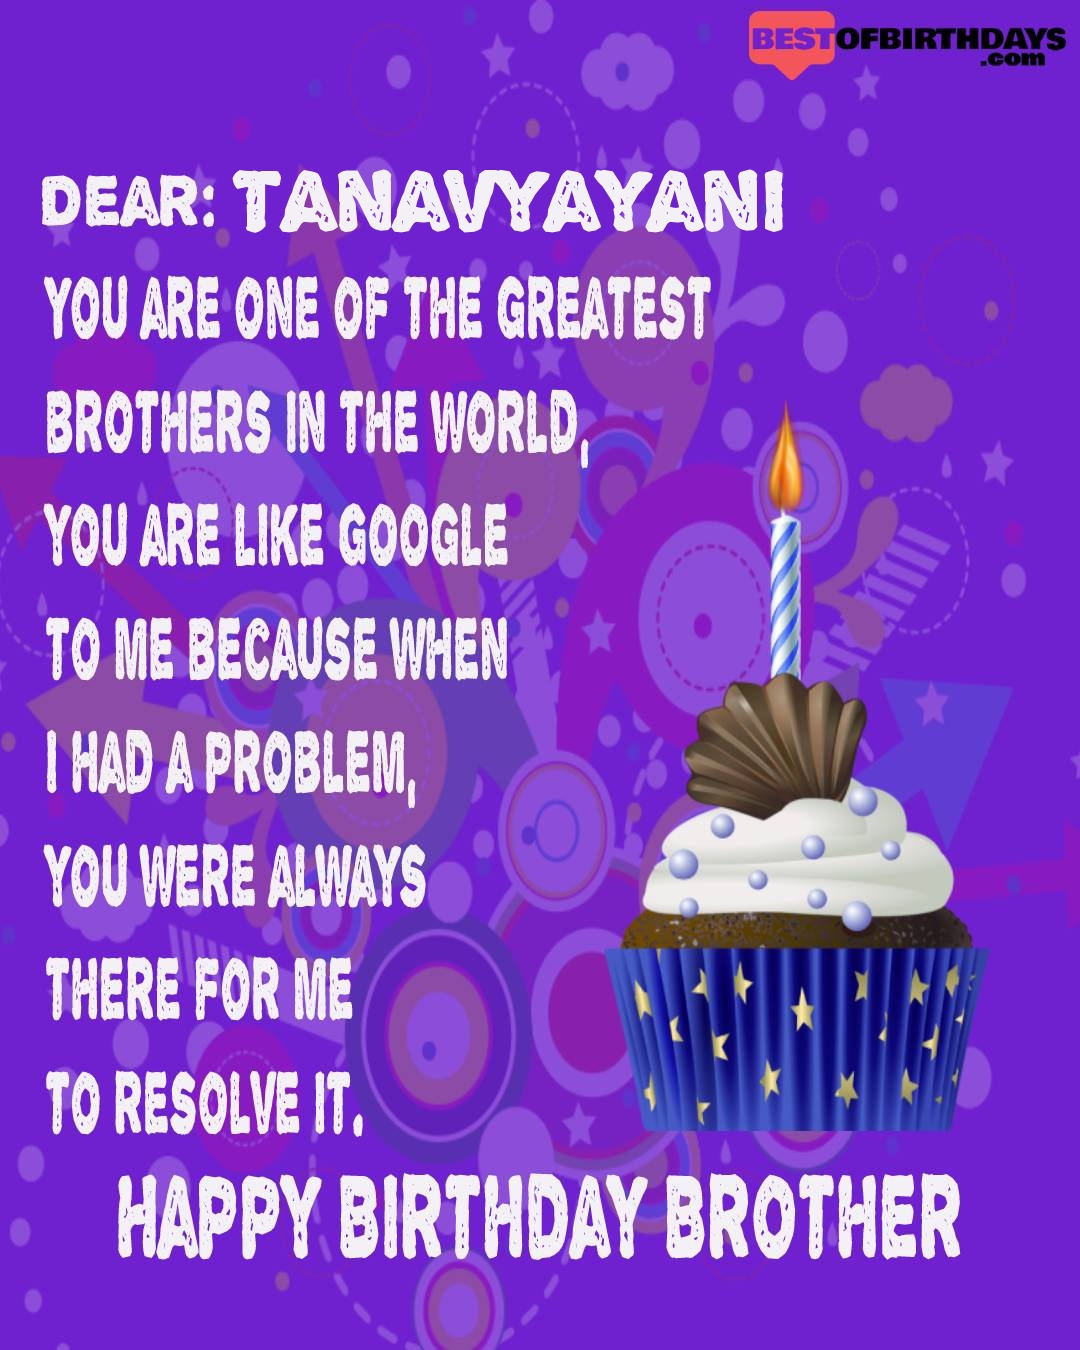 Happy birthday tanavyayani bhai brother bro